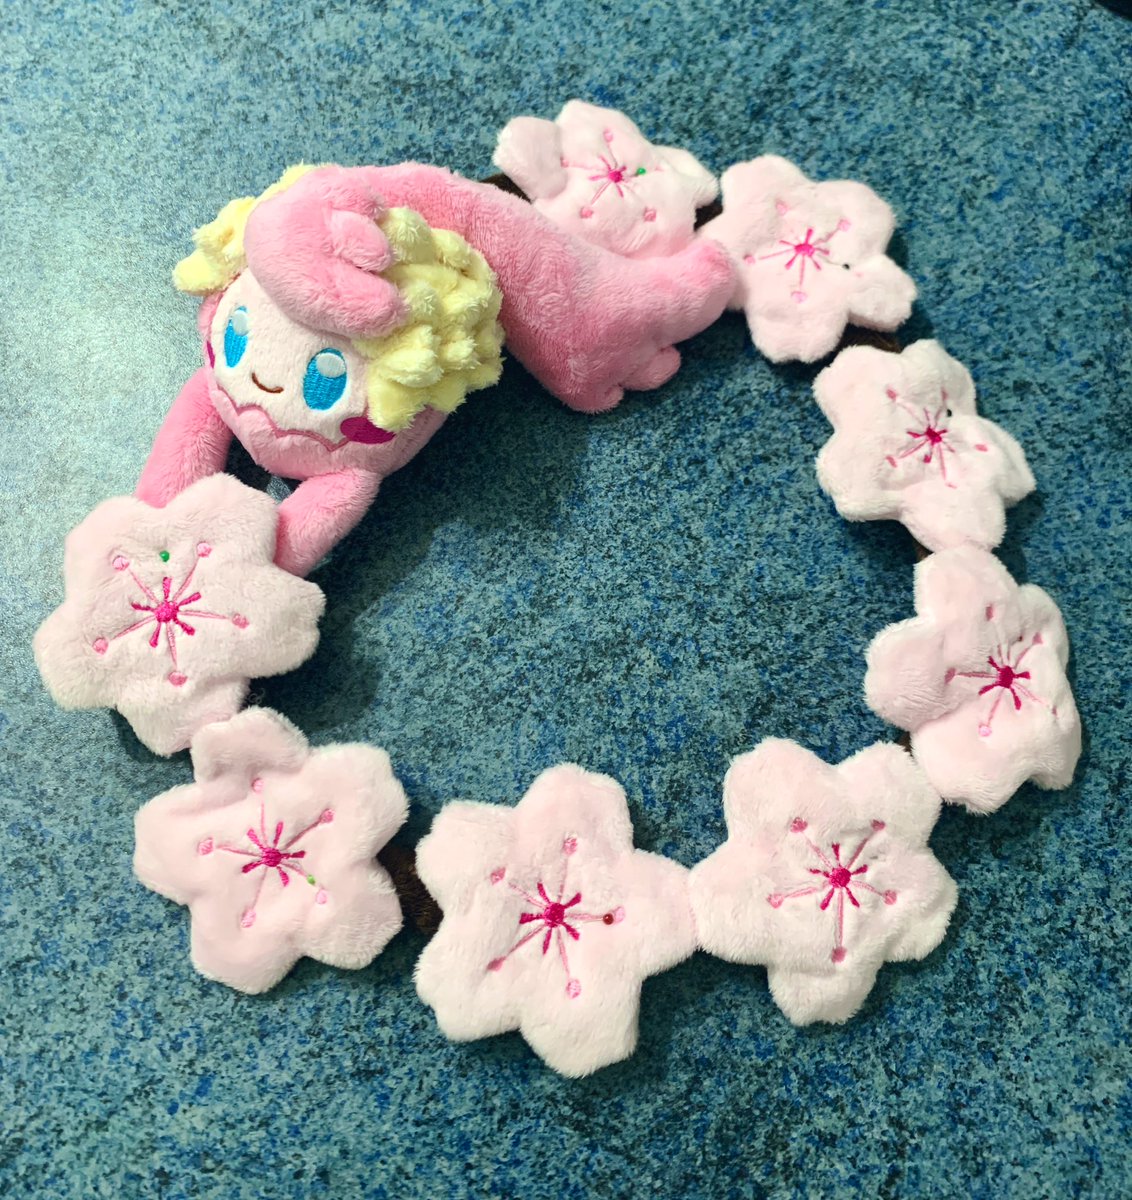 Sakura Comfey is almost done. I just need to handsew all her flowers now🌸💪
Comfey will be part of my shop update tomorrow😉
#comfey #comfeyplush #Pokemon #pokemonplush #sakura #cherryblossom #spring